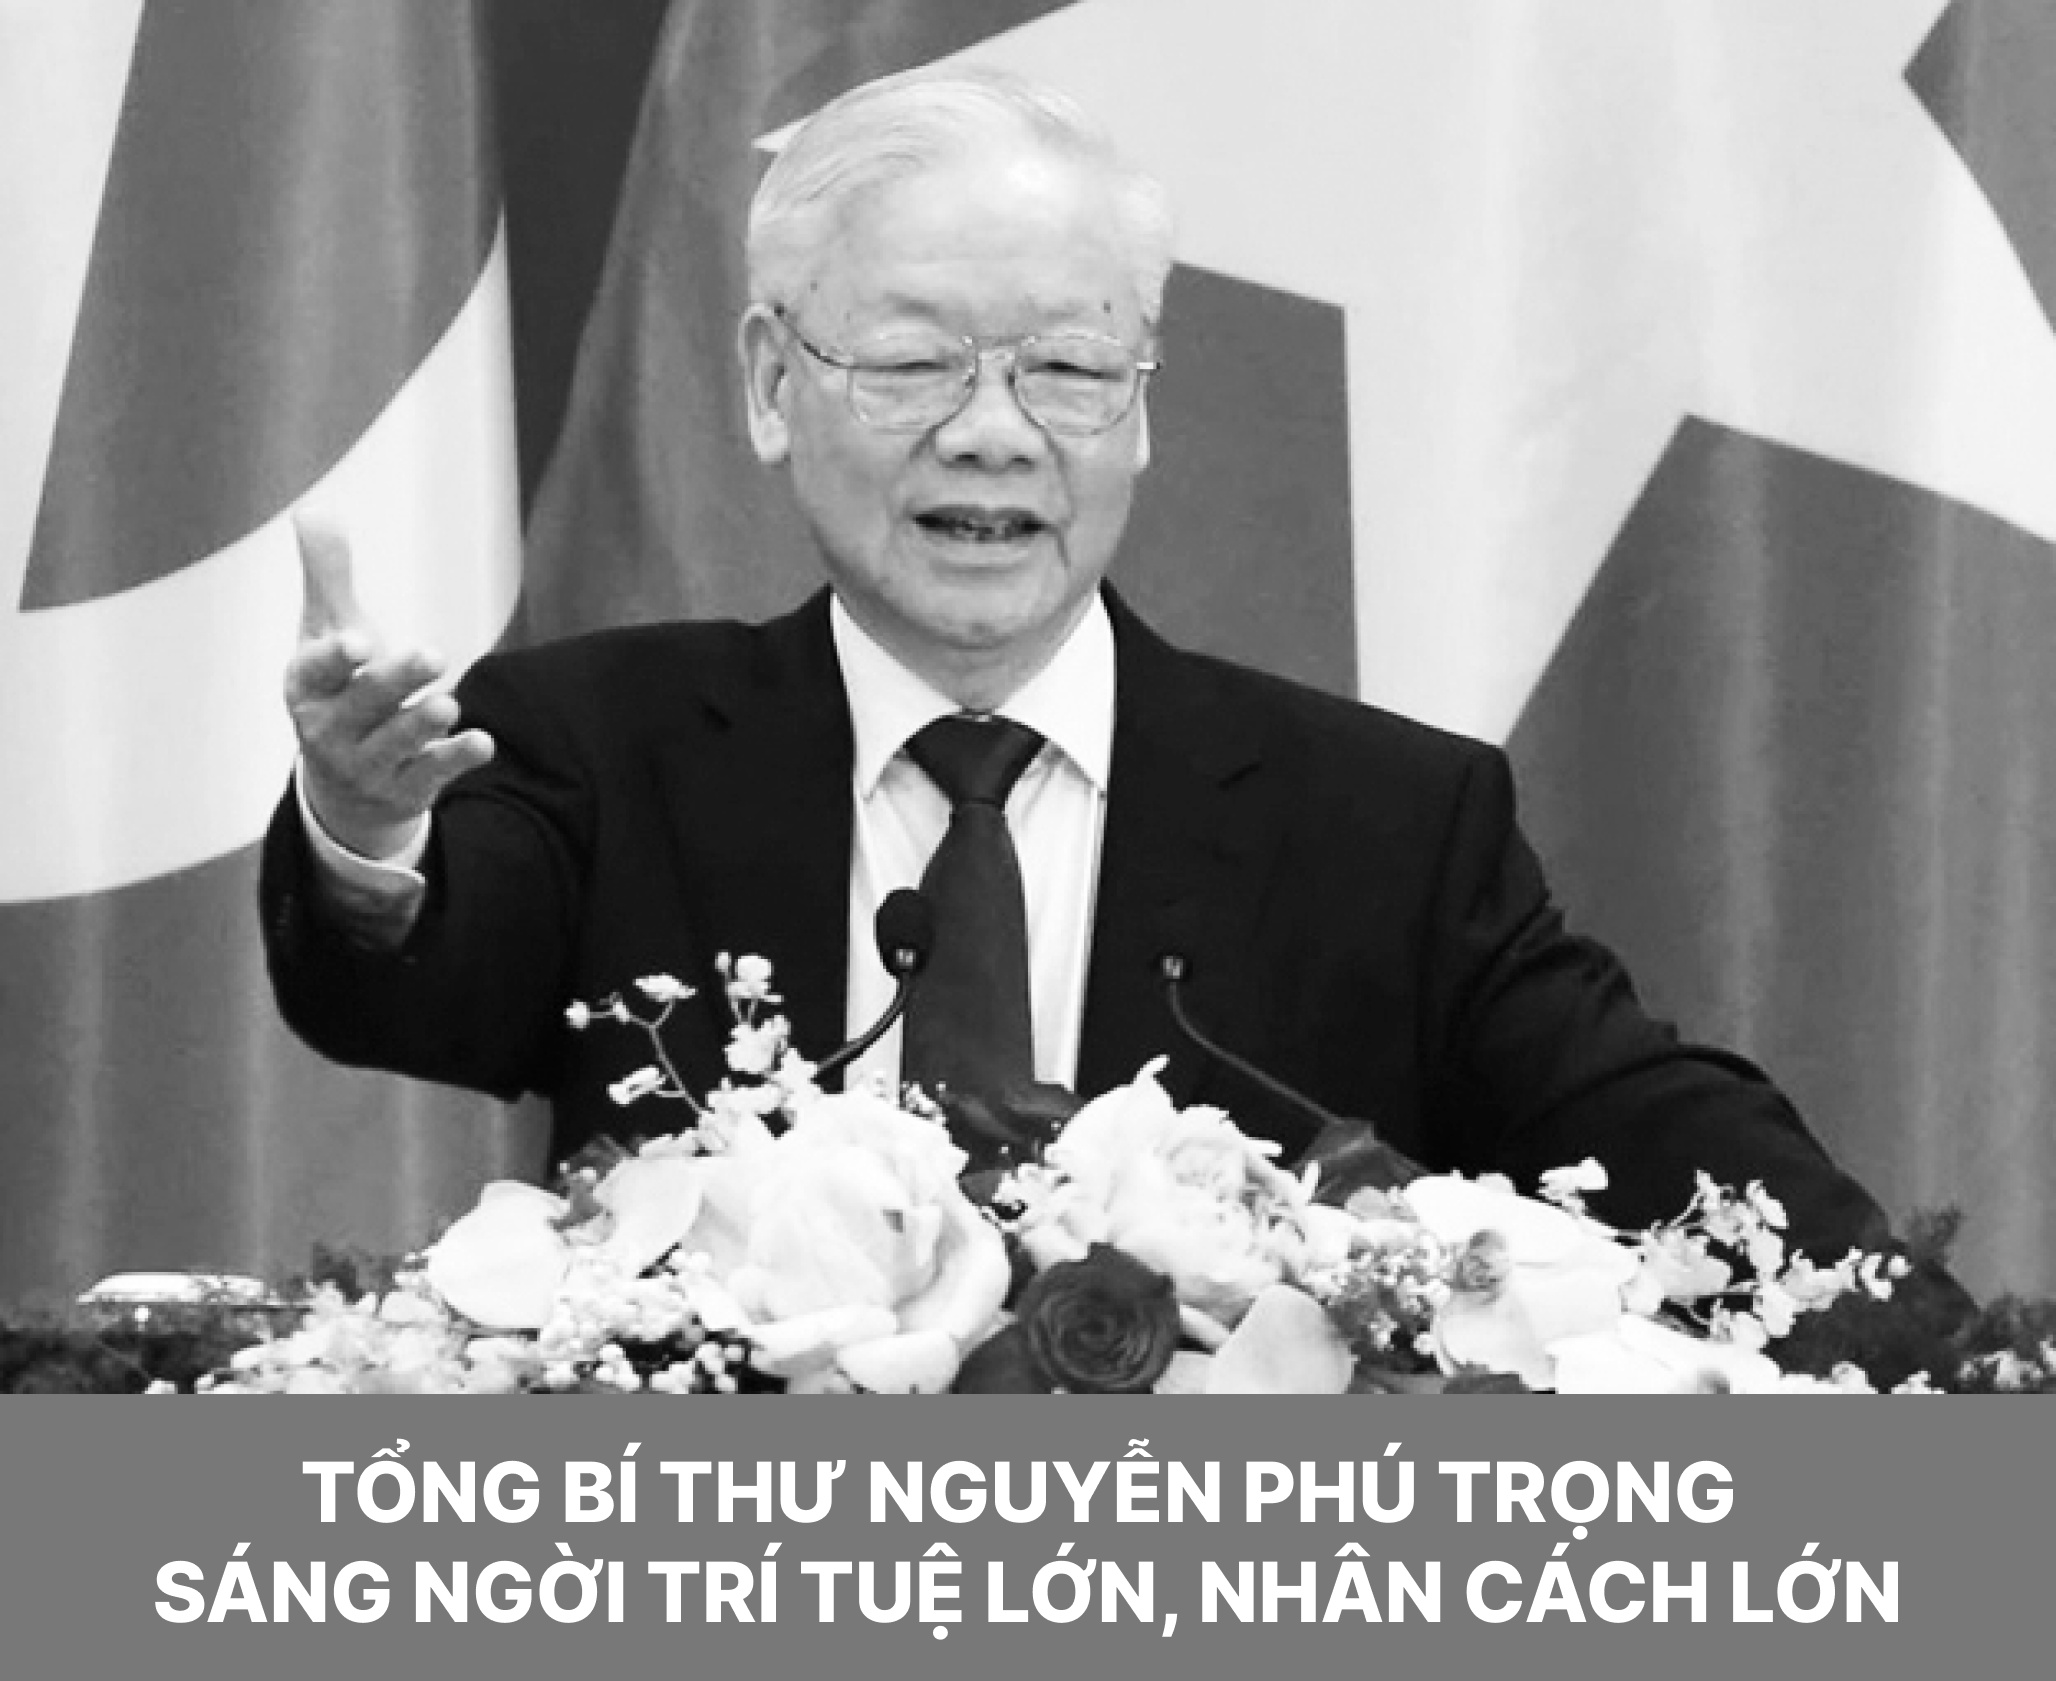 Tong Bi thu Nguyen Phu Trong: Sang ngoi tri tue lon, nhan cach lon